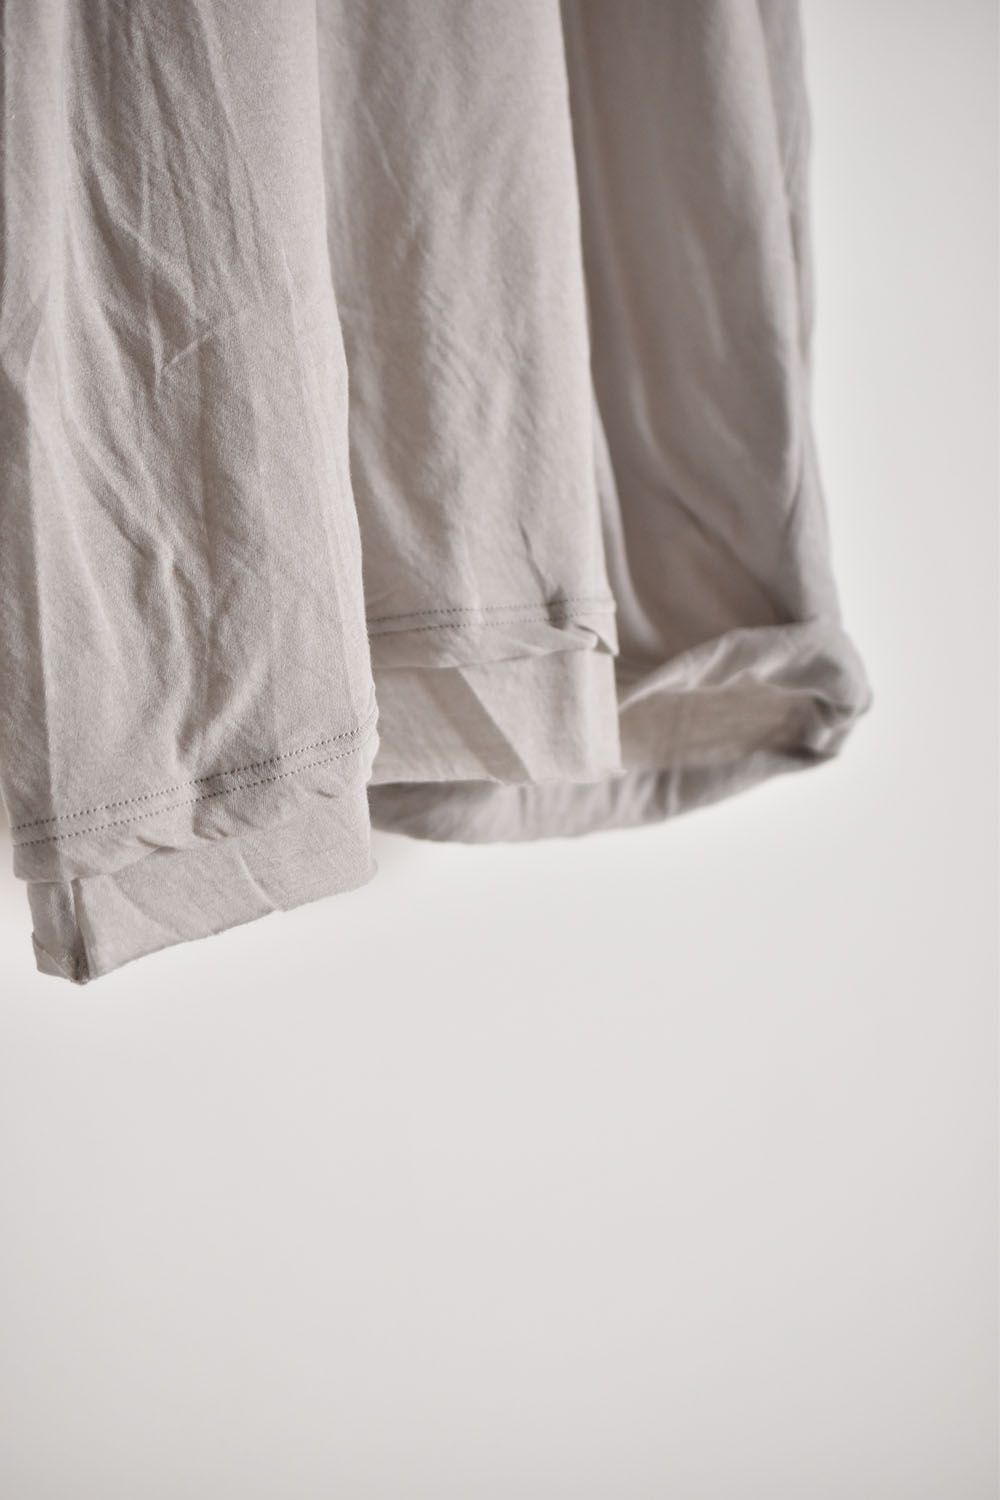 Oversized Layerd Short Sleeve T Shirt"Grey"/オーバーサイズレイヤードショートスリーブTee"グレー"